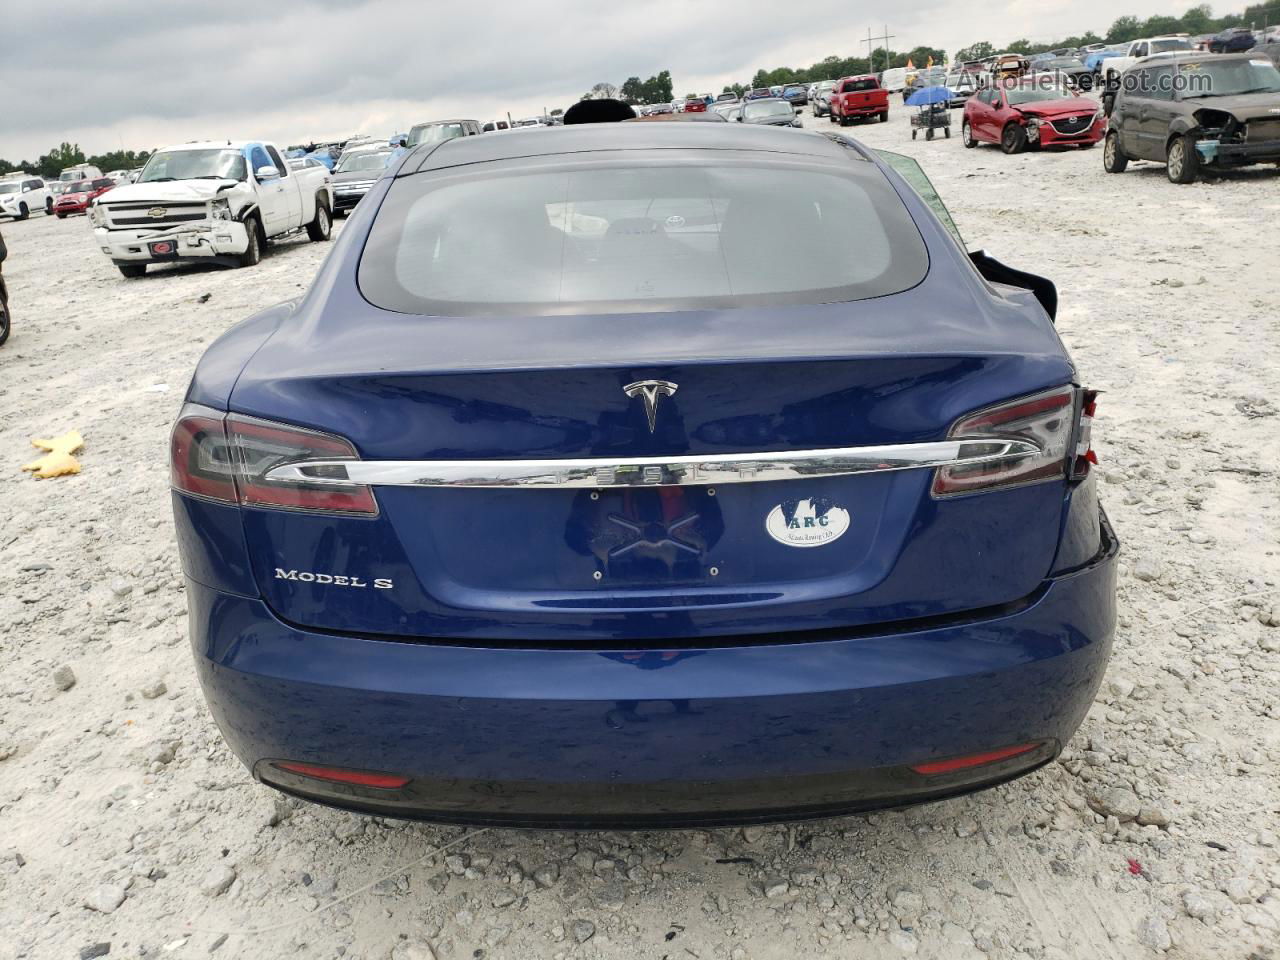 2016 Tesla Model S  Blue vin: 5YJSA1E19GF146695